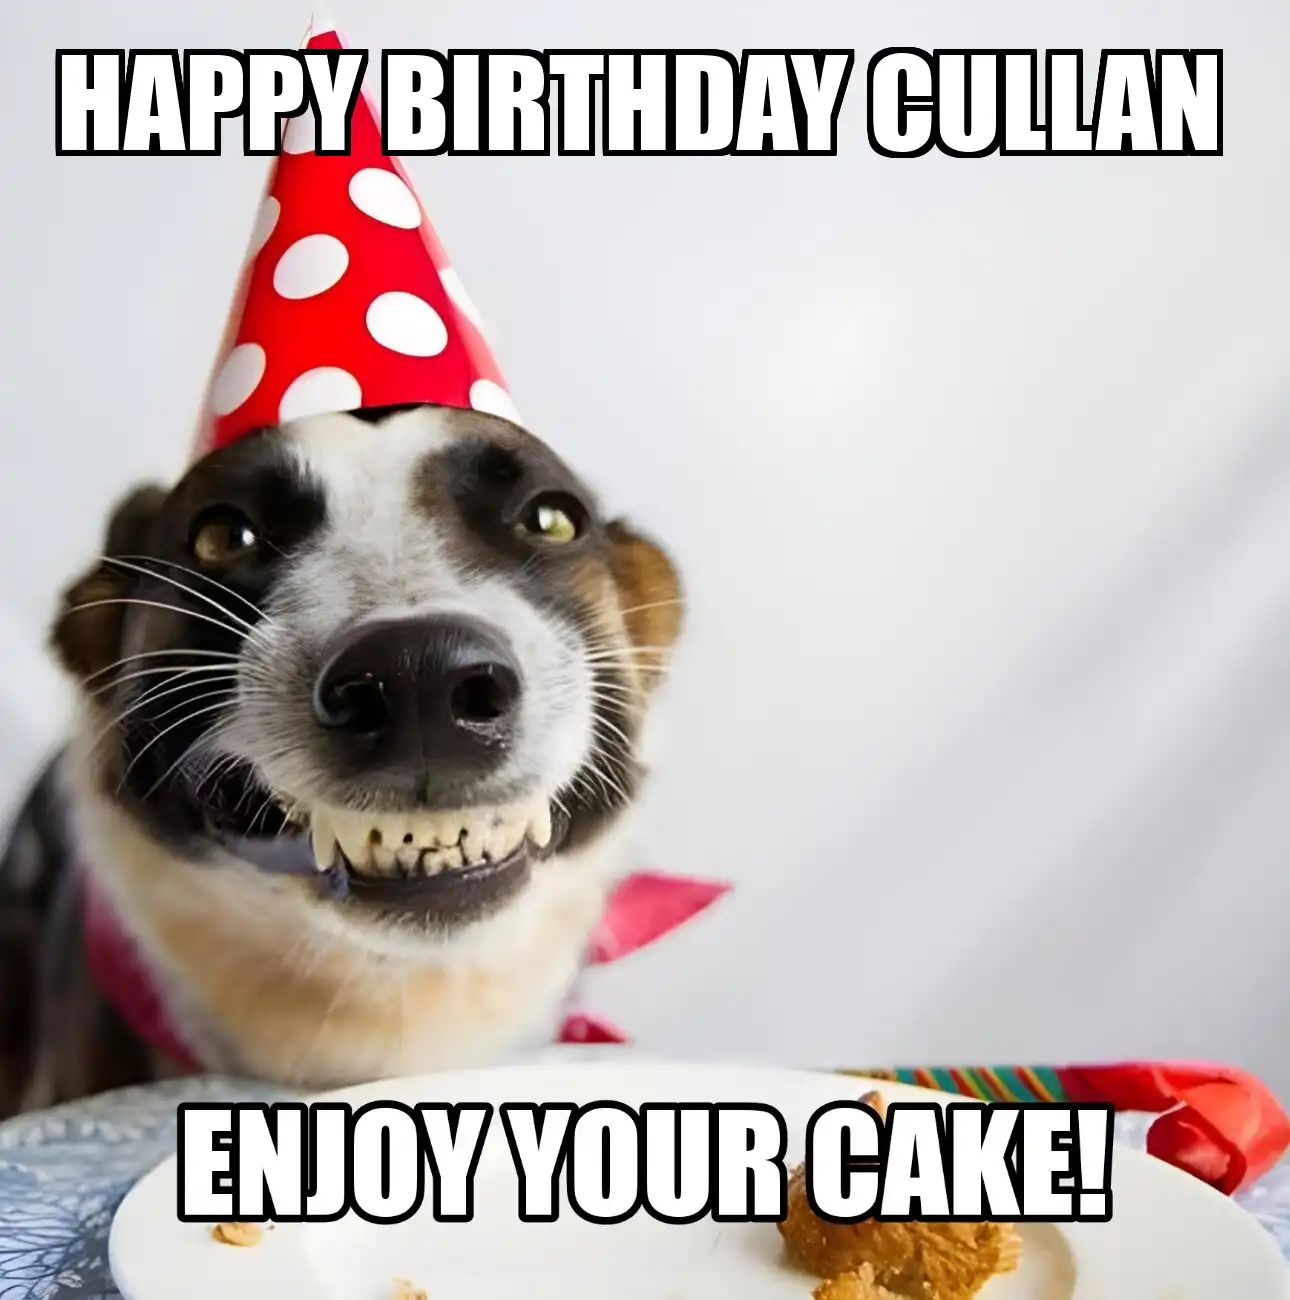 Happy Birthday Cullan Enjoy Your Cake Dog Meme